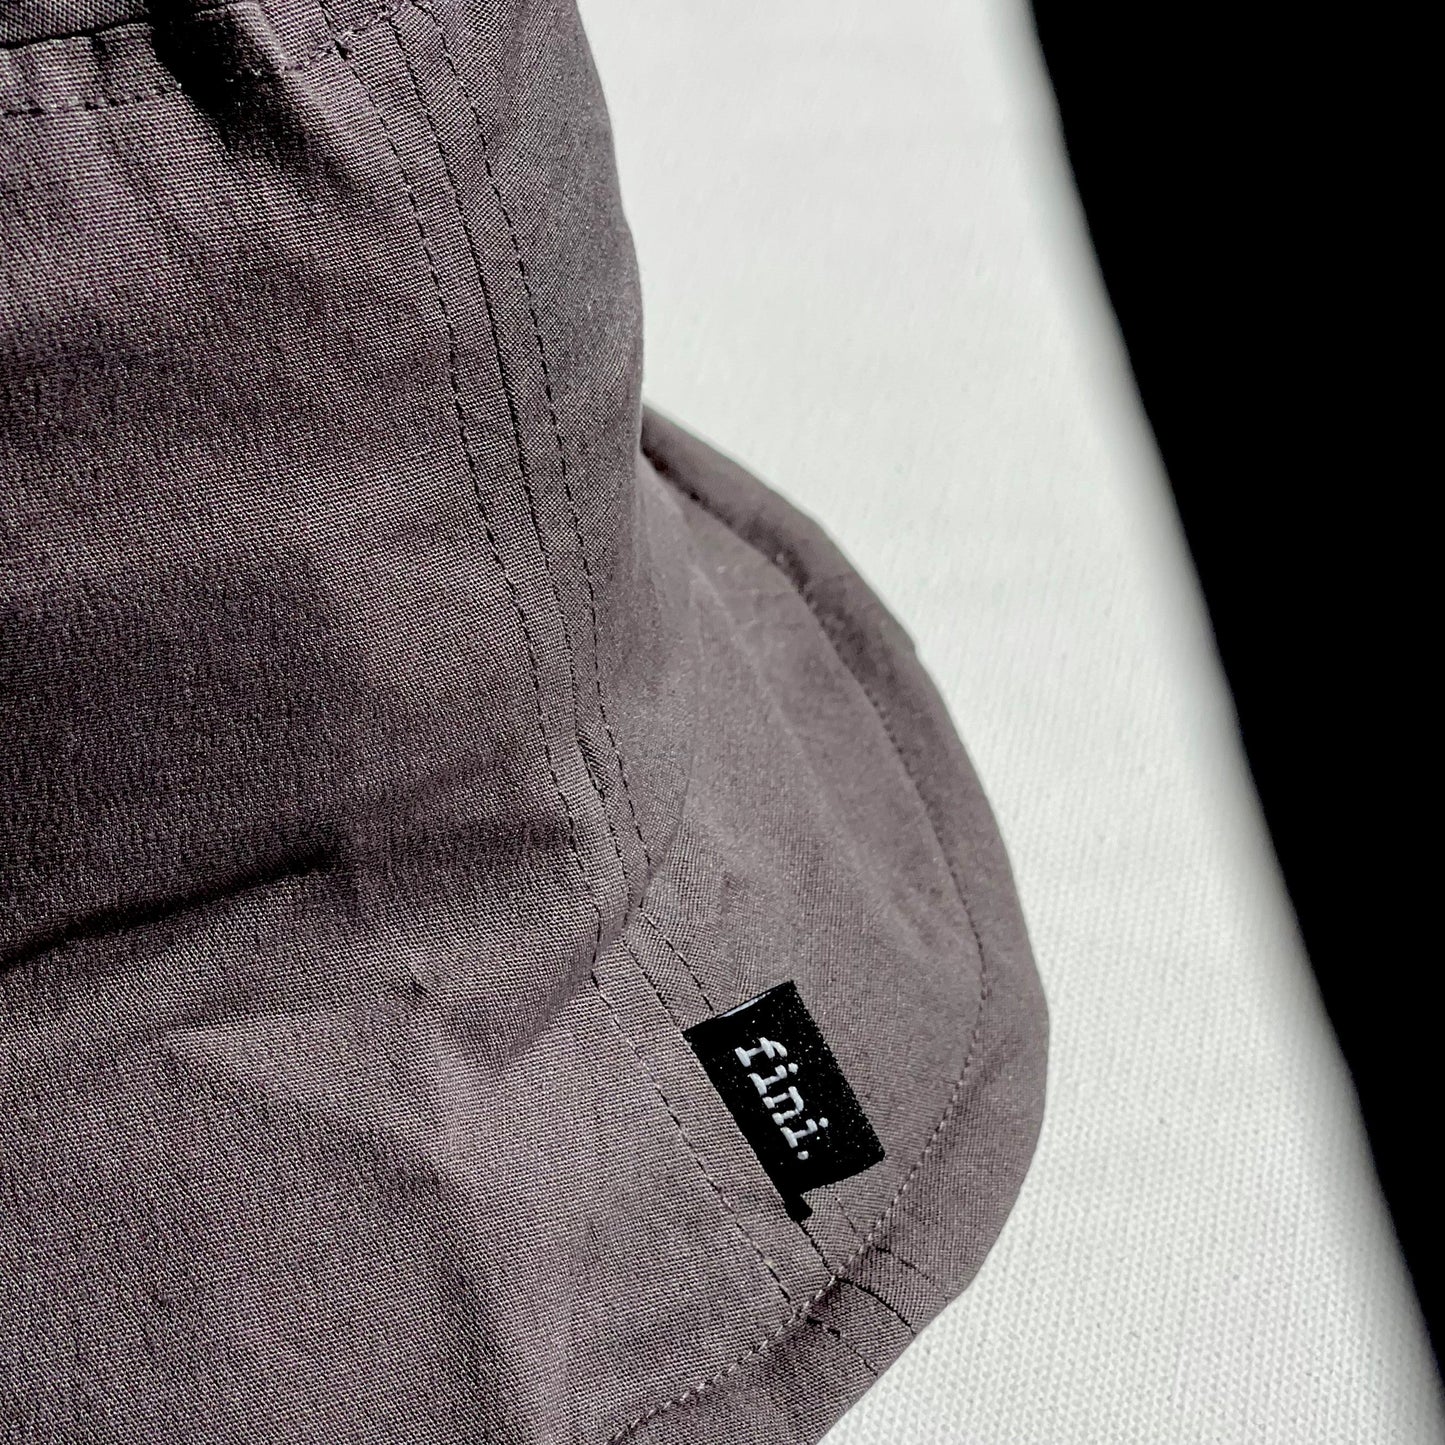 fini. boho hat | coal-fini. the label